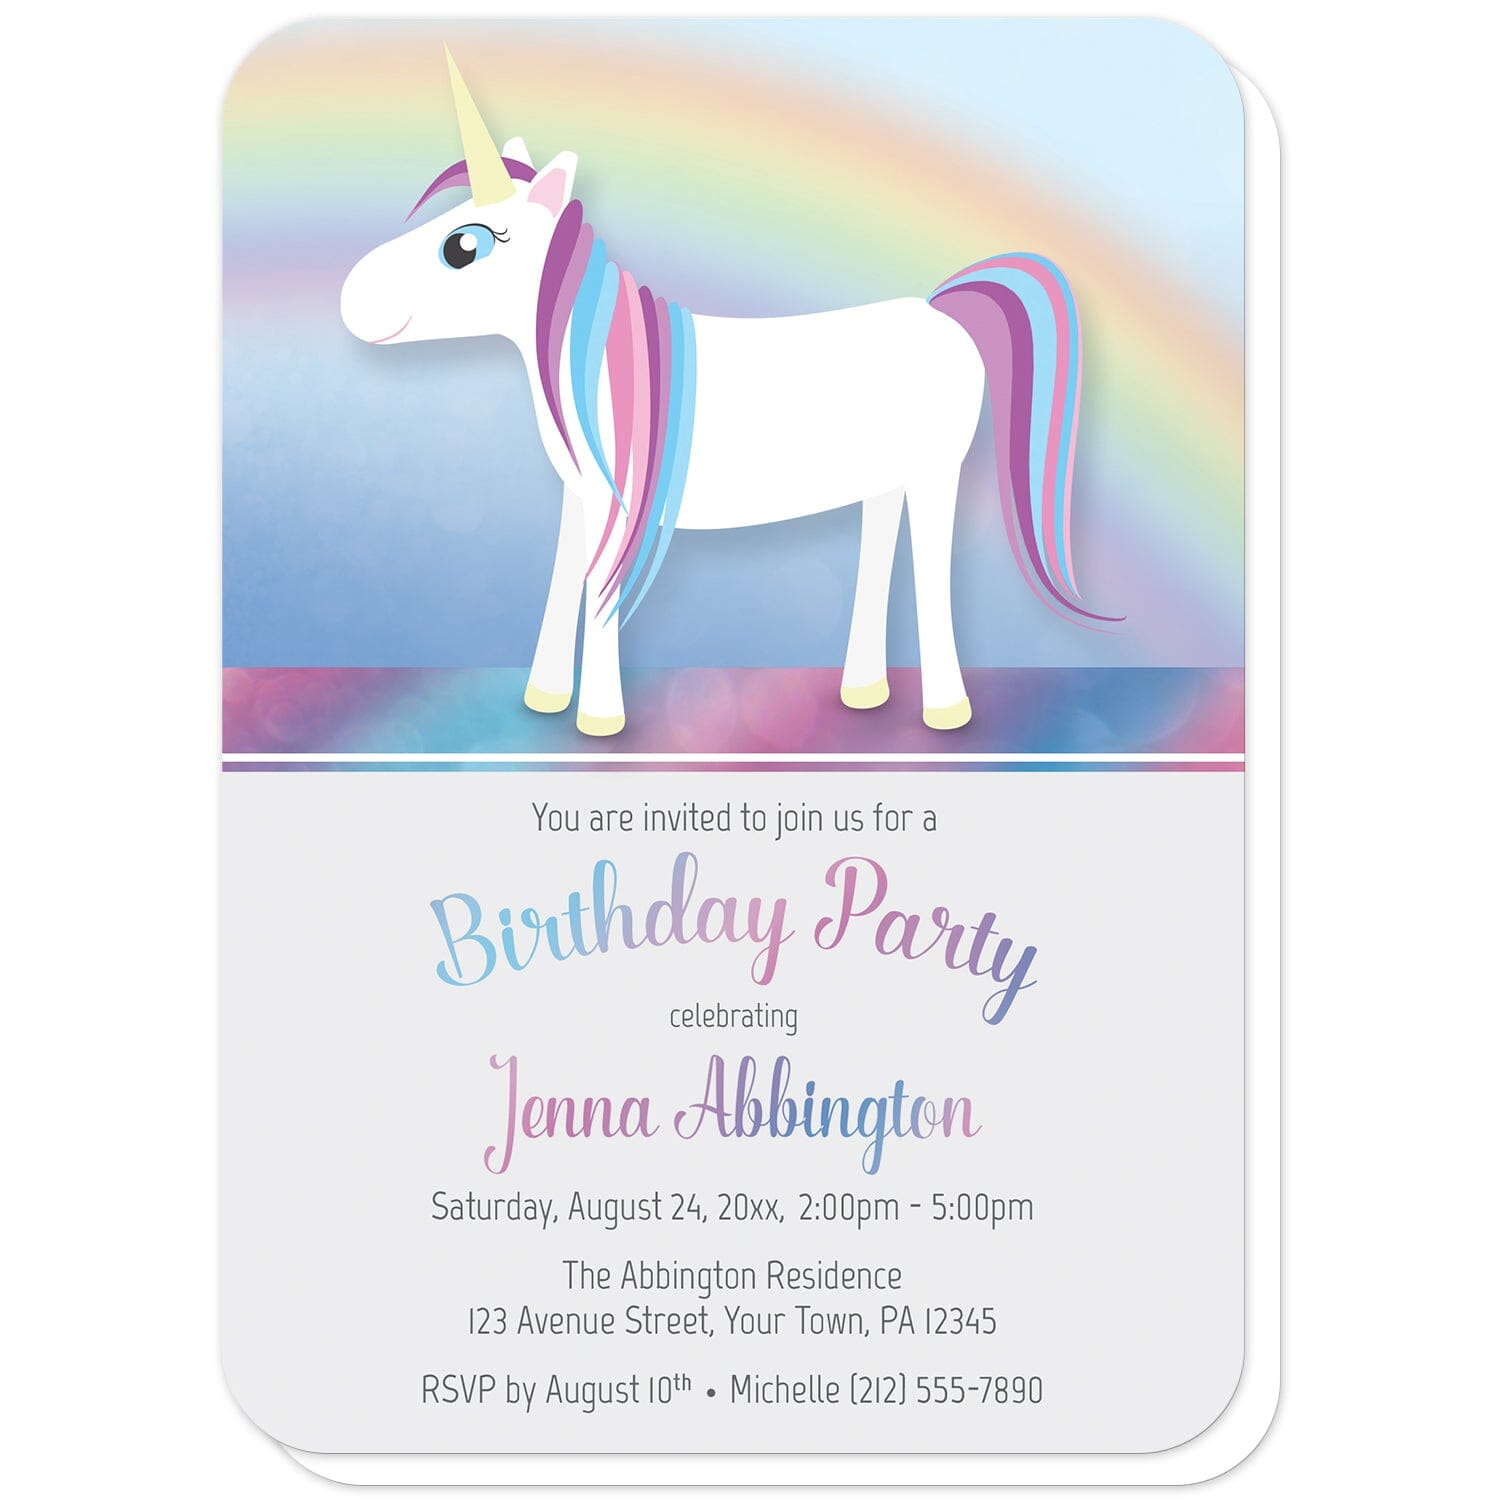 170 Rainbow Party Ideas  rainbow parties, rainbow birthday, rainbow  birthday party